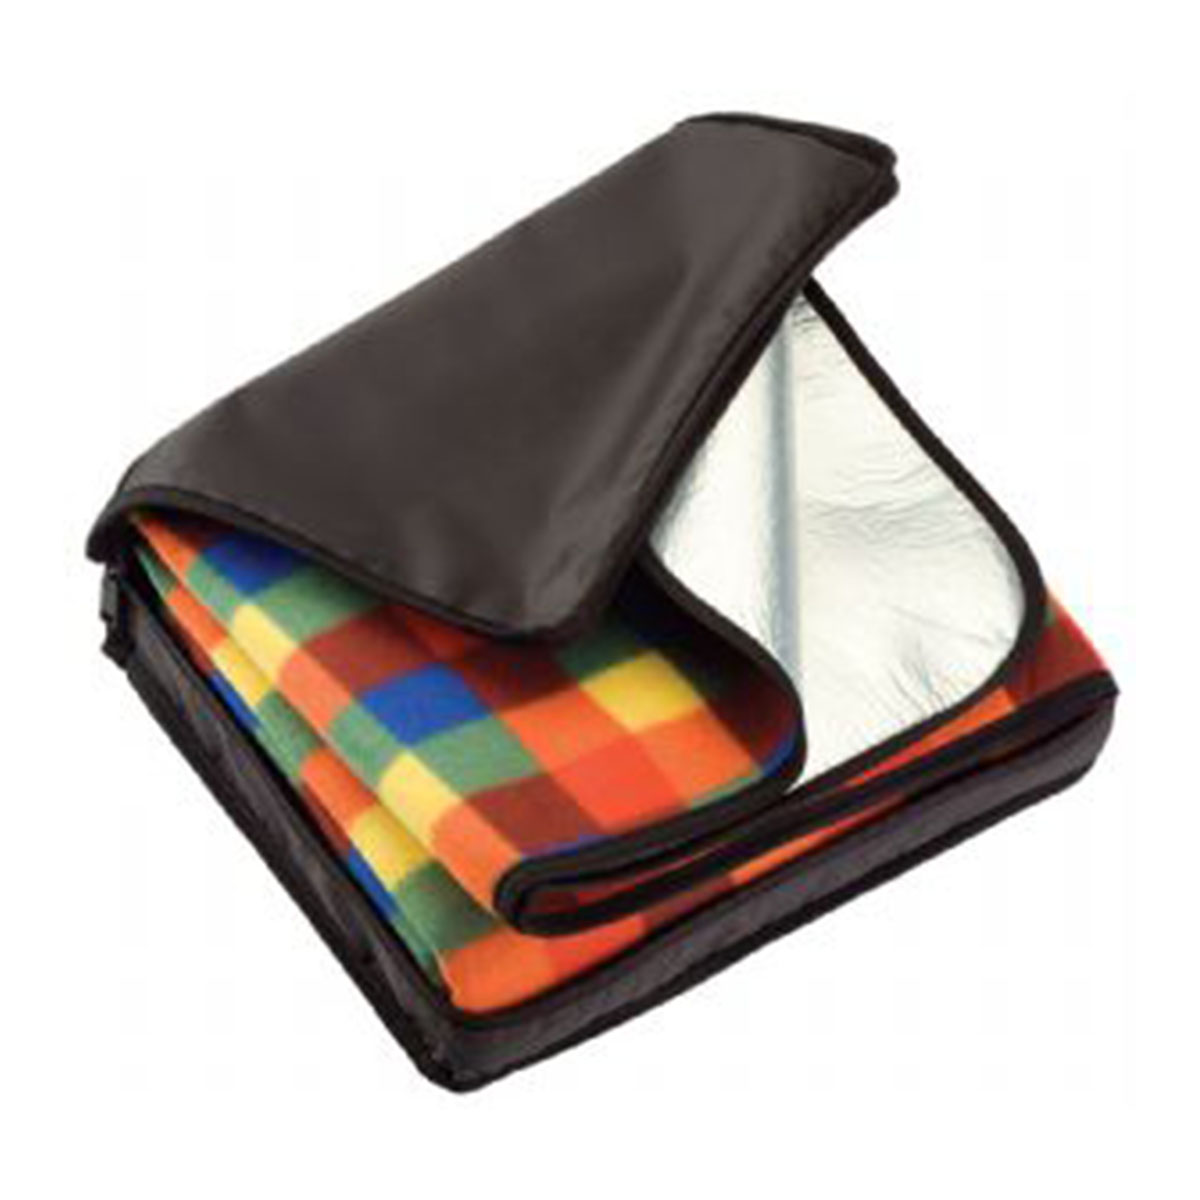 Picnic Rug in Carry Bag-Black Case  Multi Coloured Blanket.